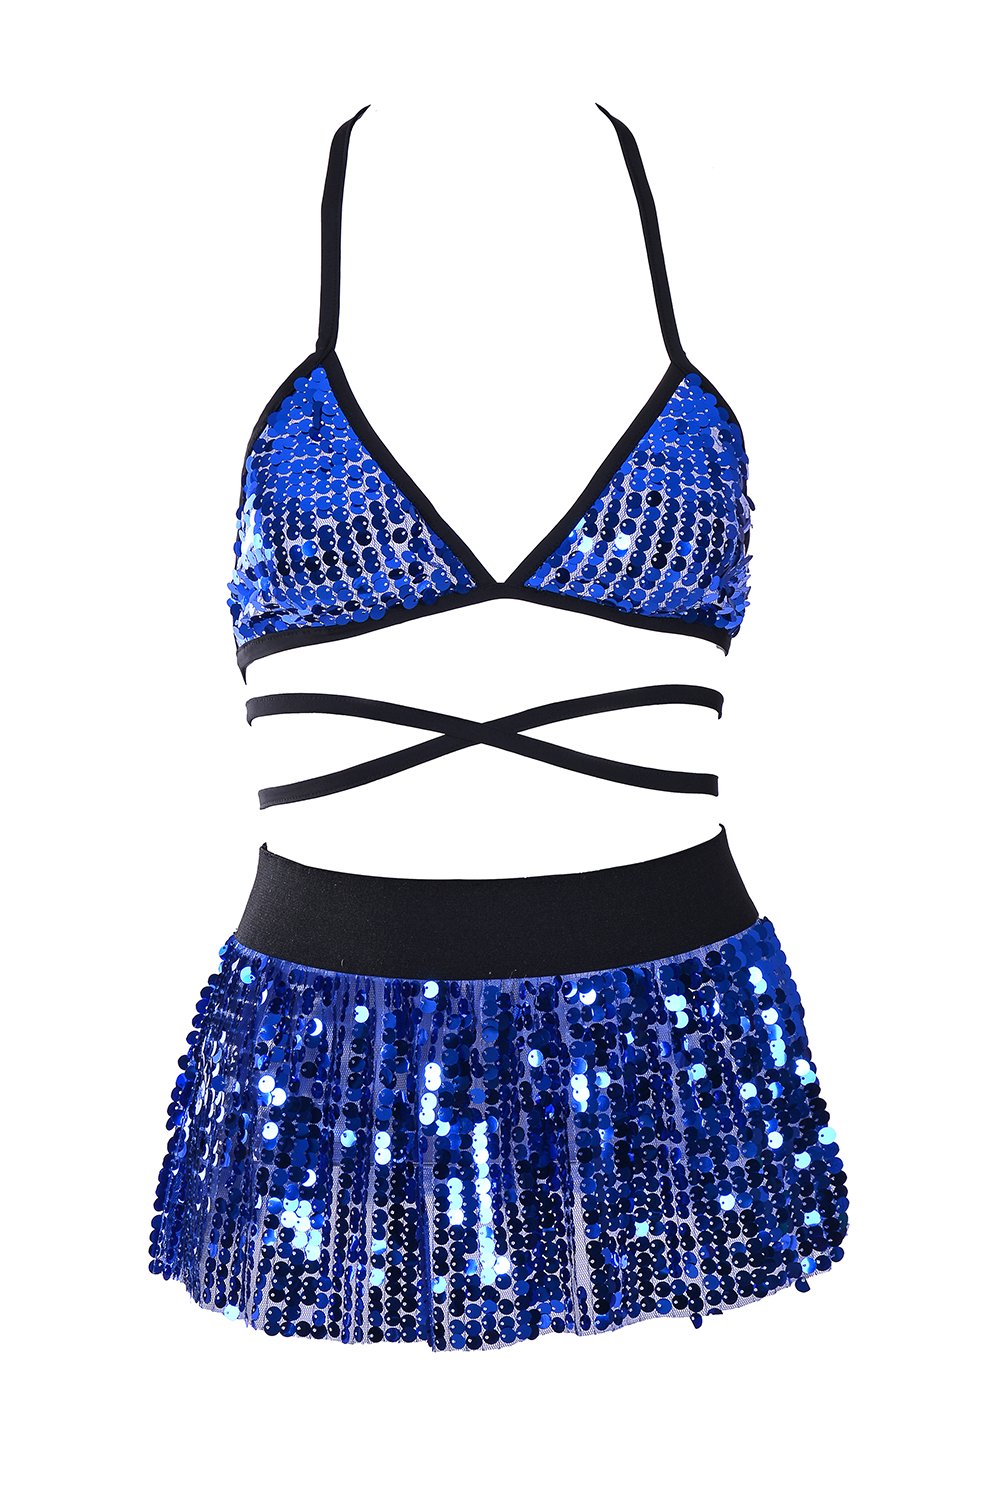 Ocean Blue Sequin Set (Top & Skirt)